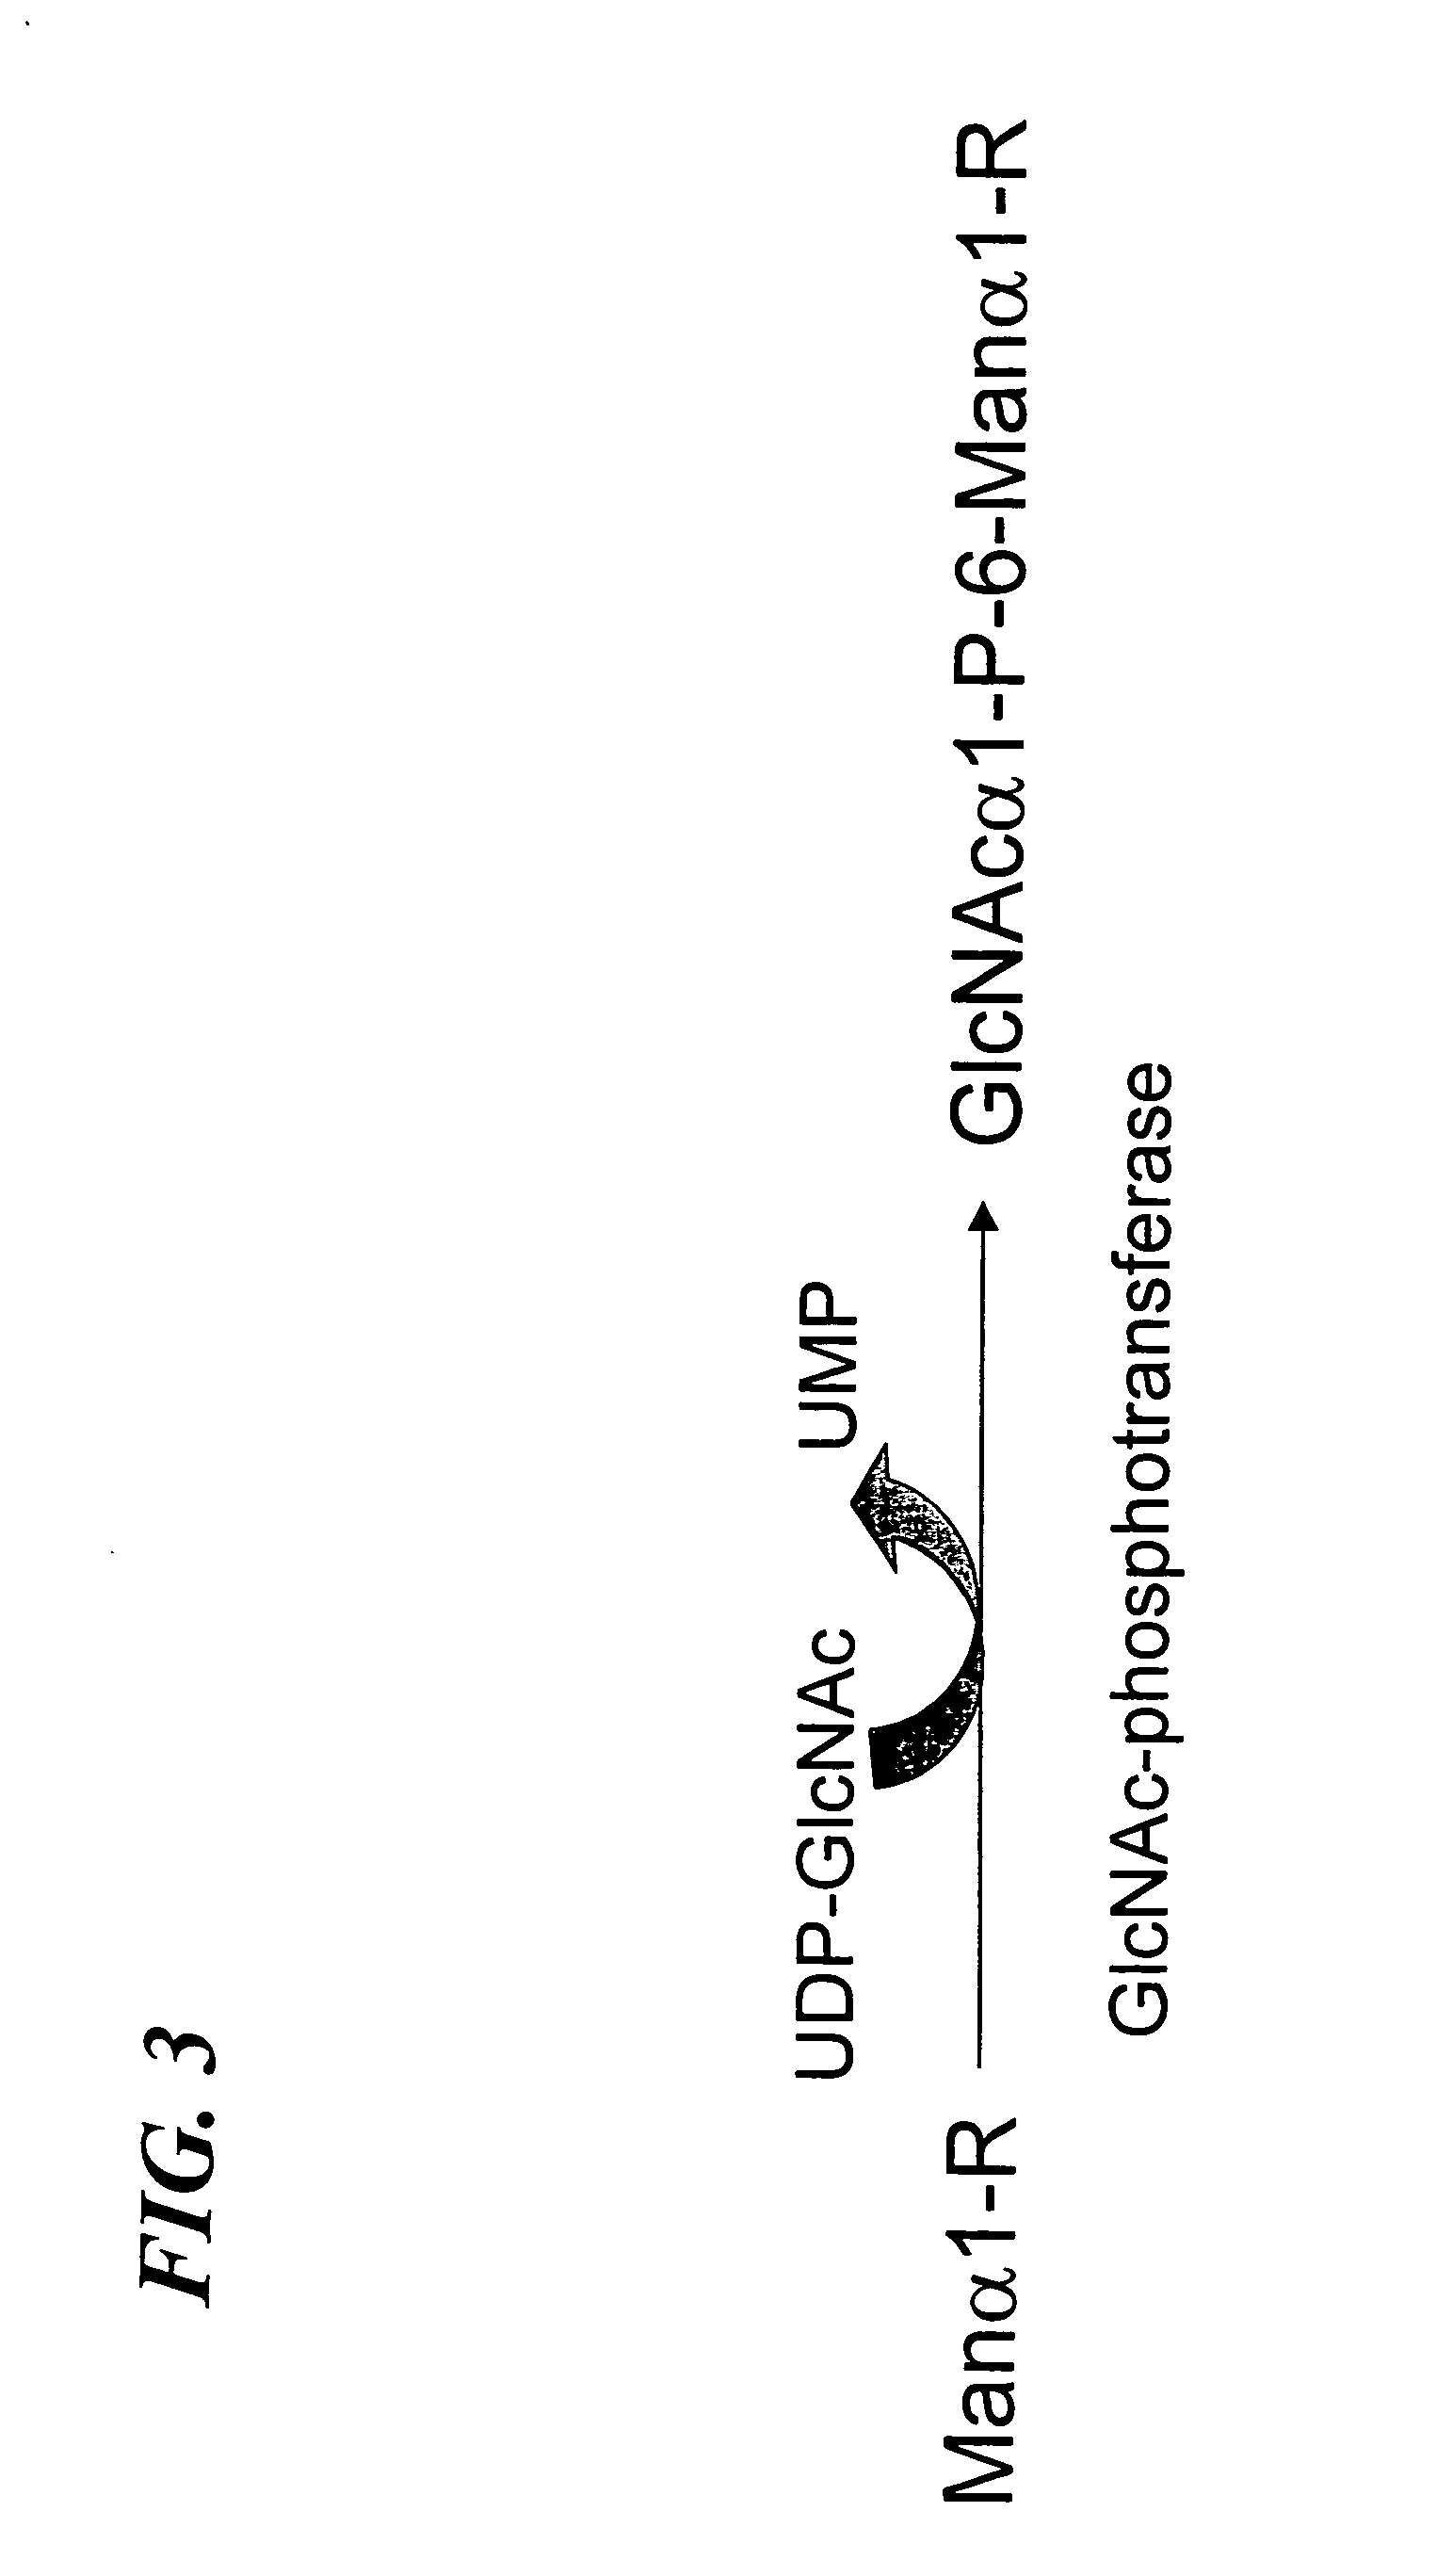 Soluble GlcNAc phosphotransferase